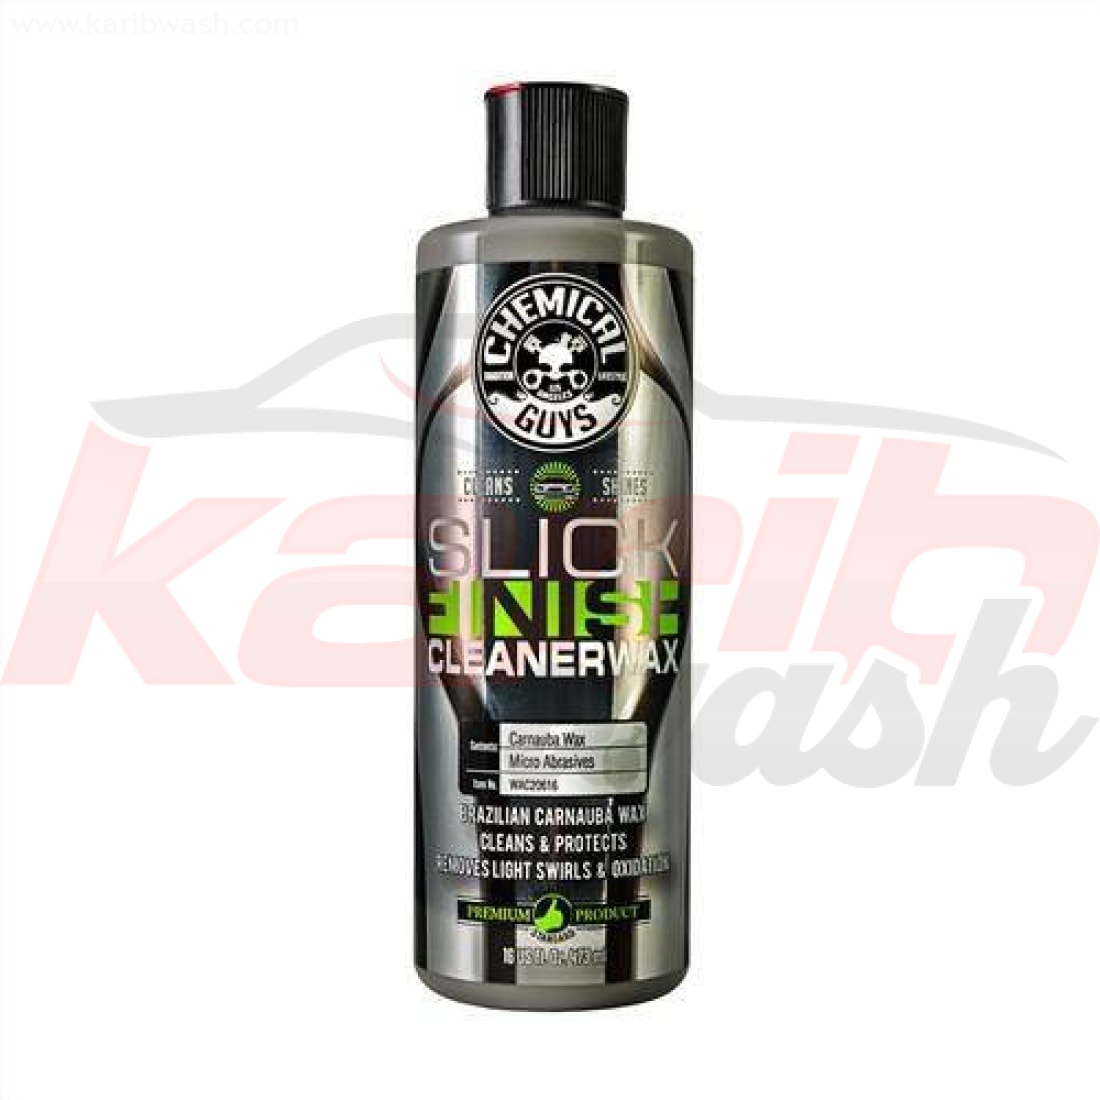 Slick Finish Cleaner Wax (16 oz) CHEMICAL GUYS - KARIBWASH